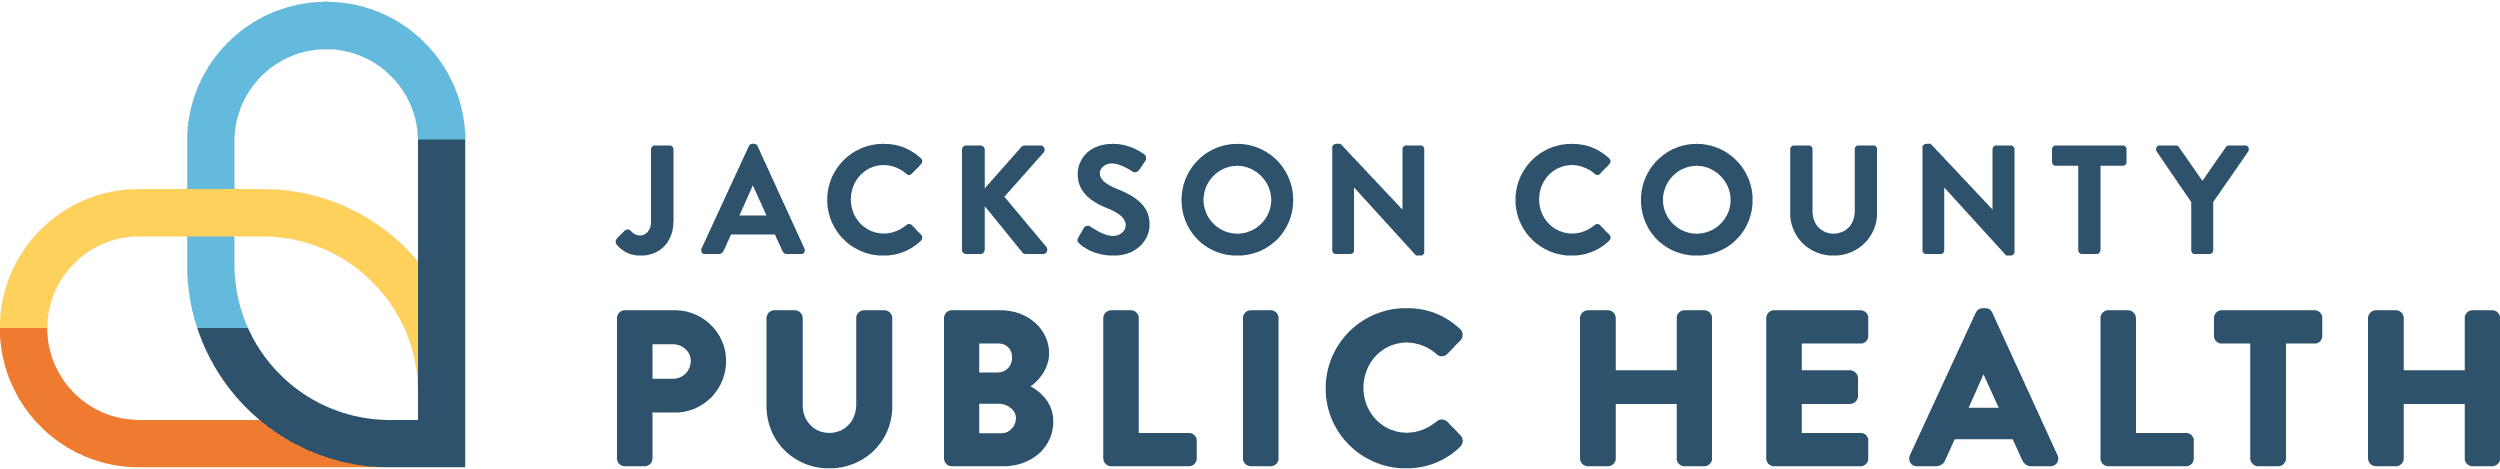 Jackson County Public Health